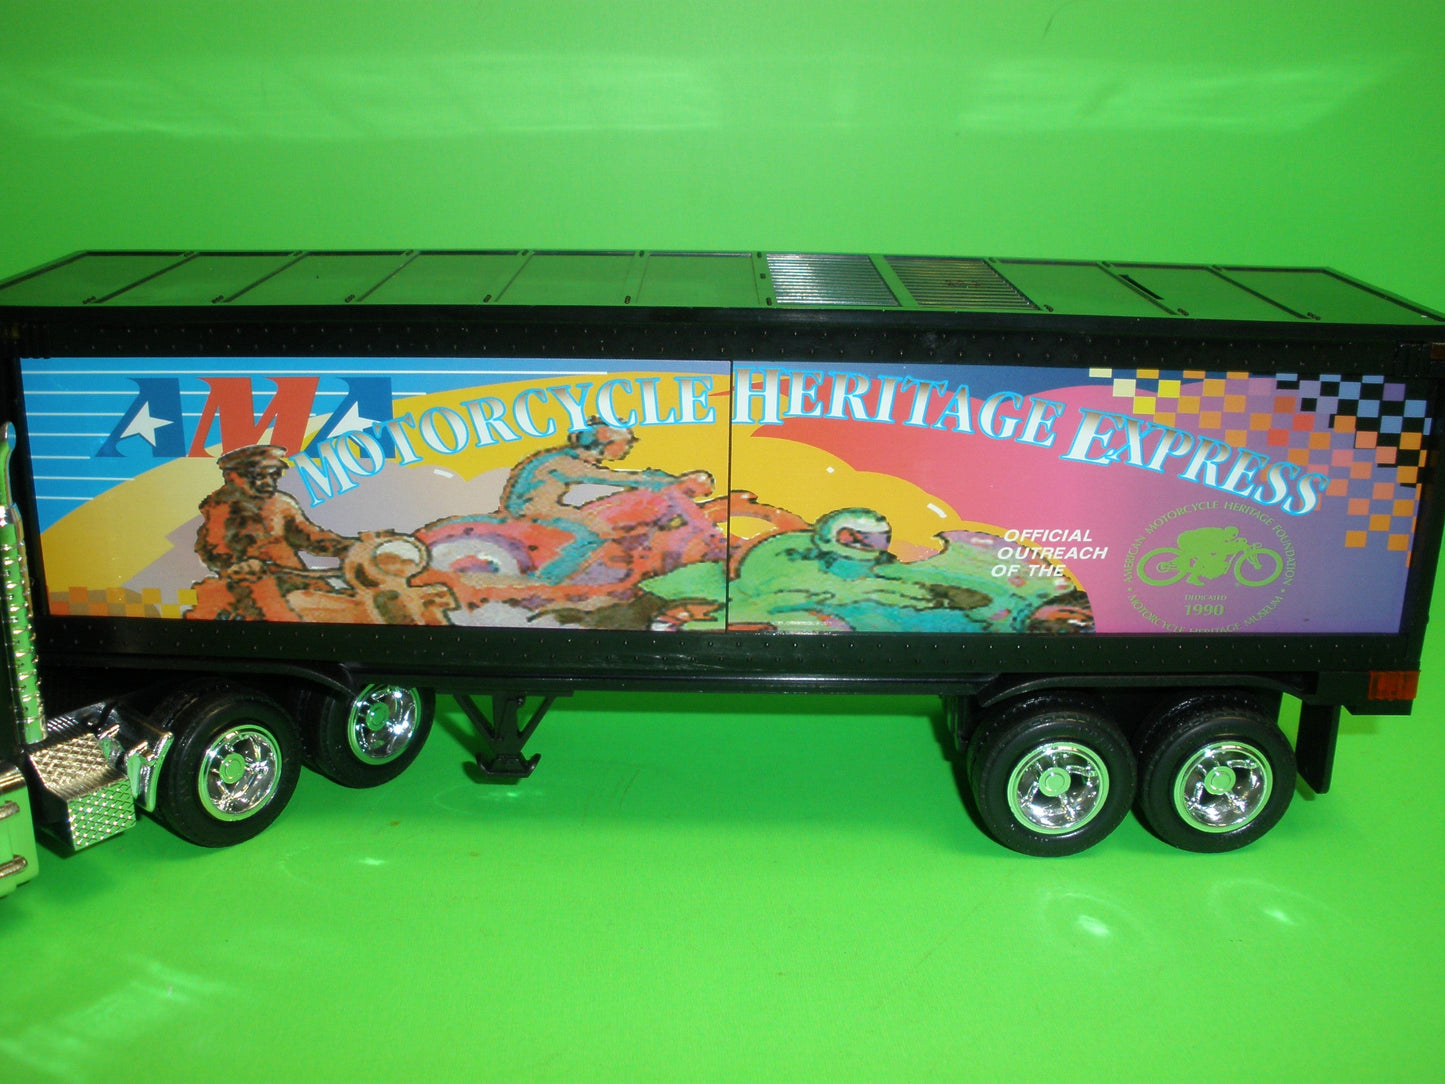 1998 American Motorcyclist Association (AMA) Freight Truck